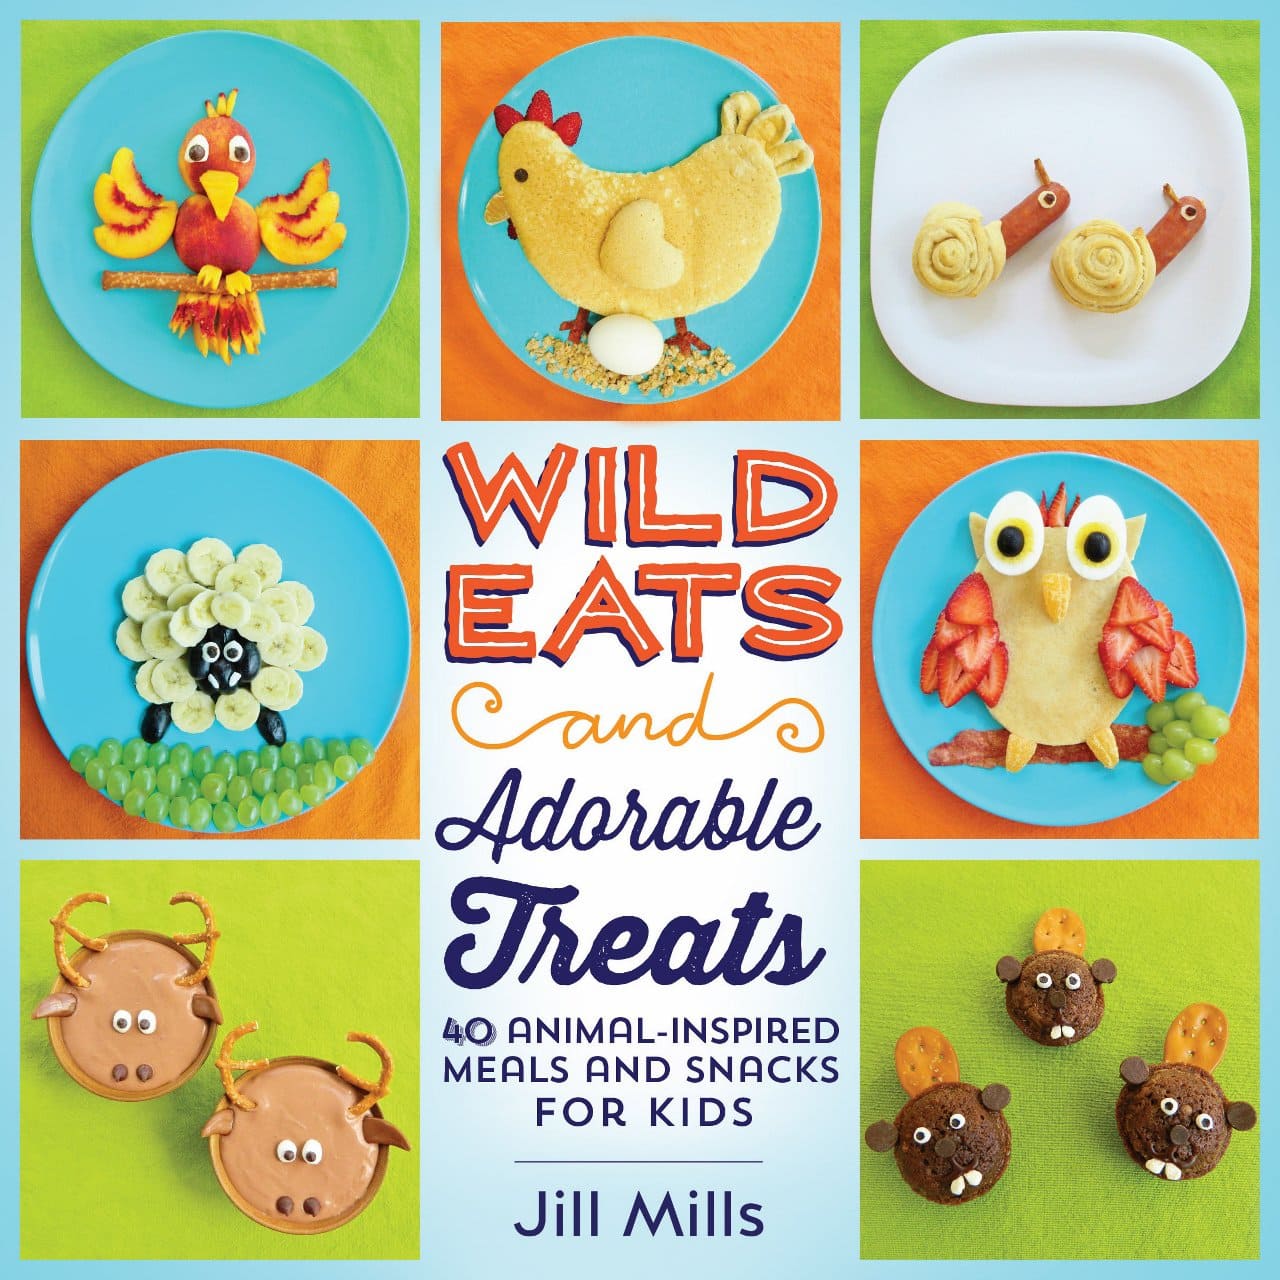 Wild Eats & Adorable Treats....fun food ideas for Kids!